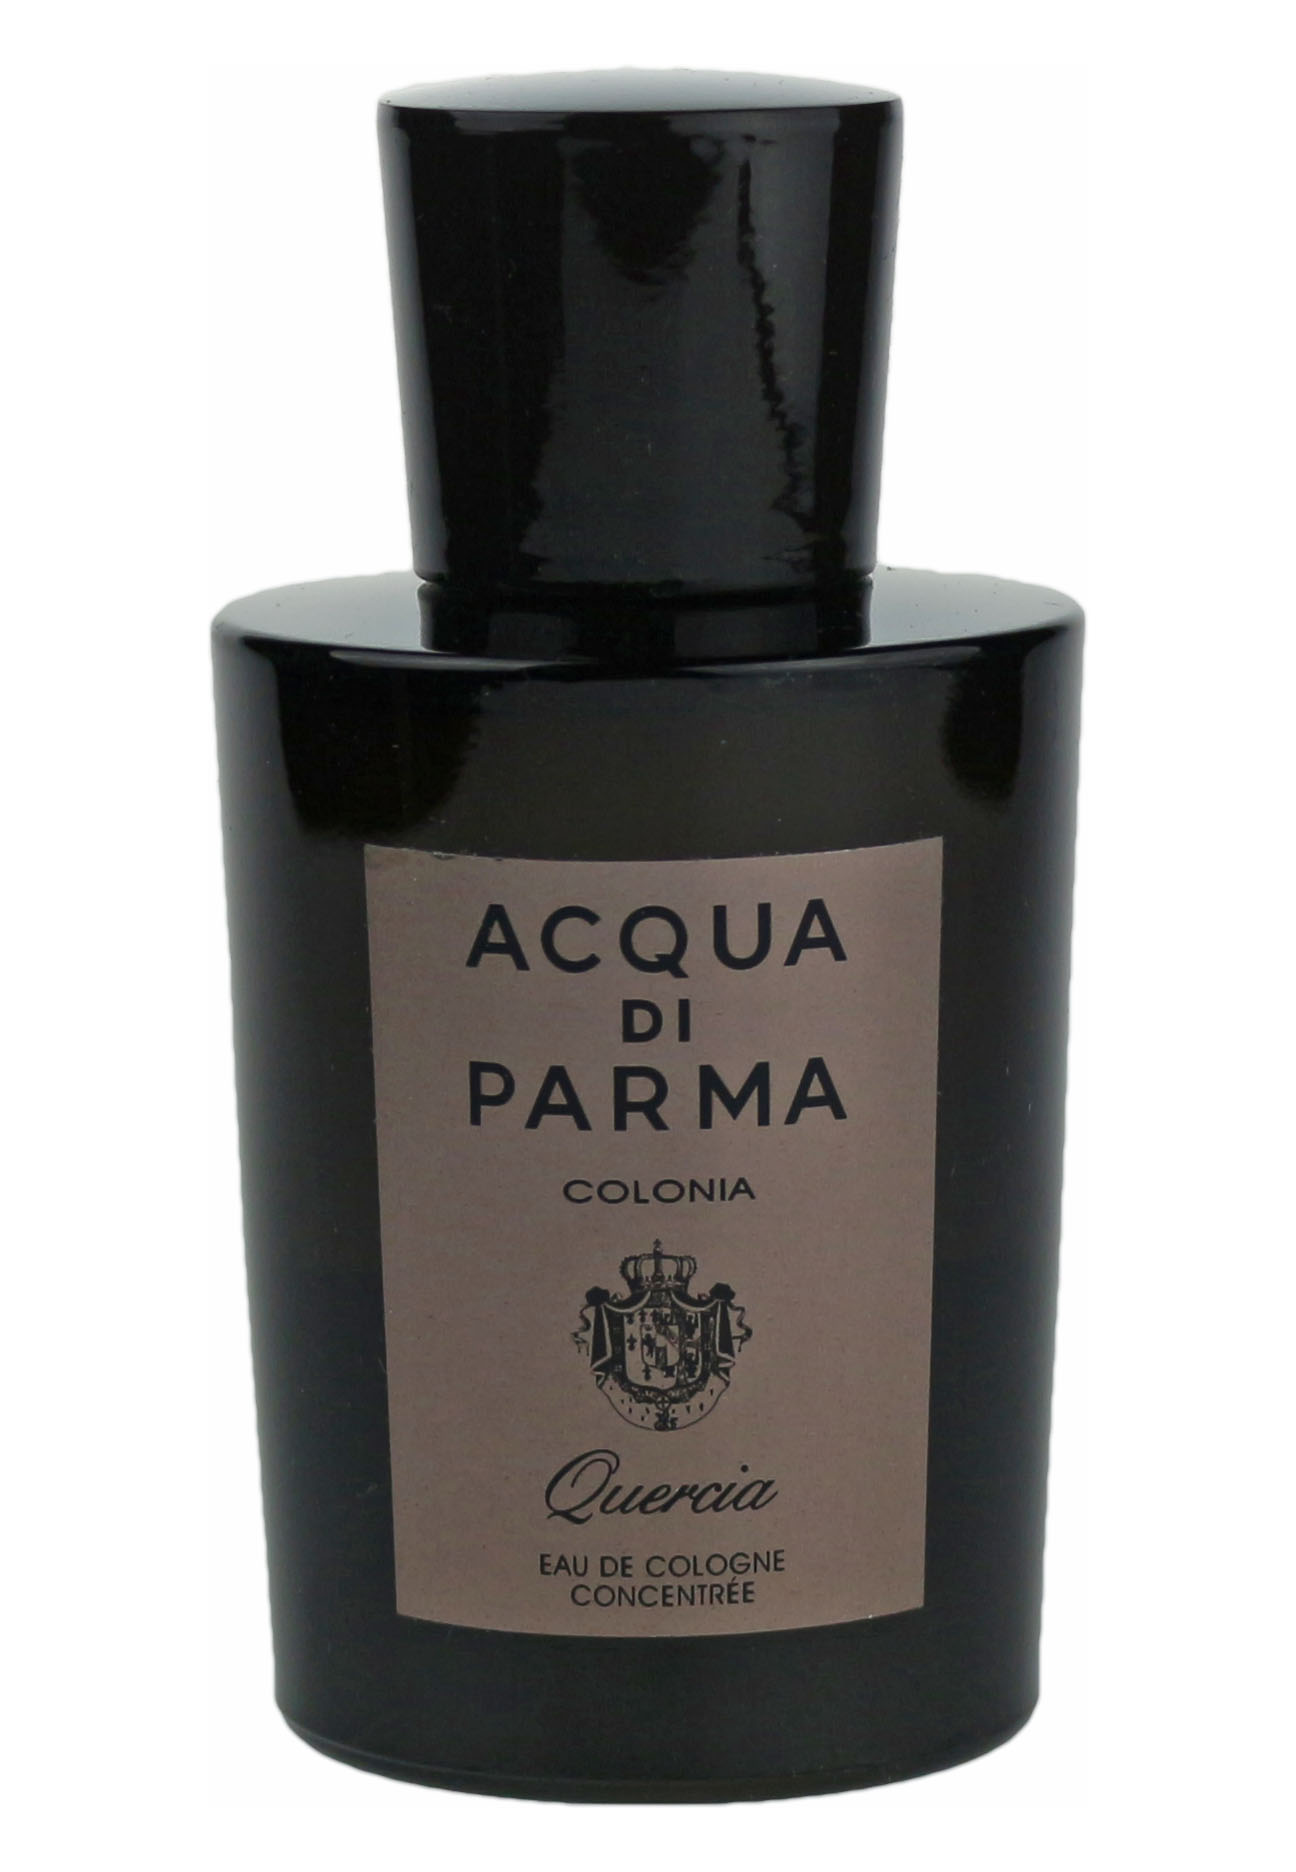 Acqua Di Parma 'Colonia Quercia' Eau De Cologne Concentree 3.4 oz ...